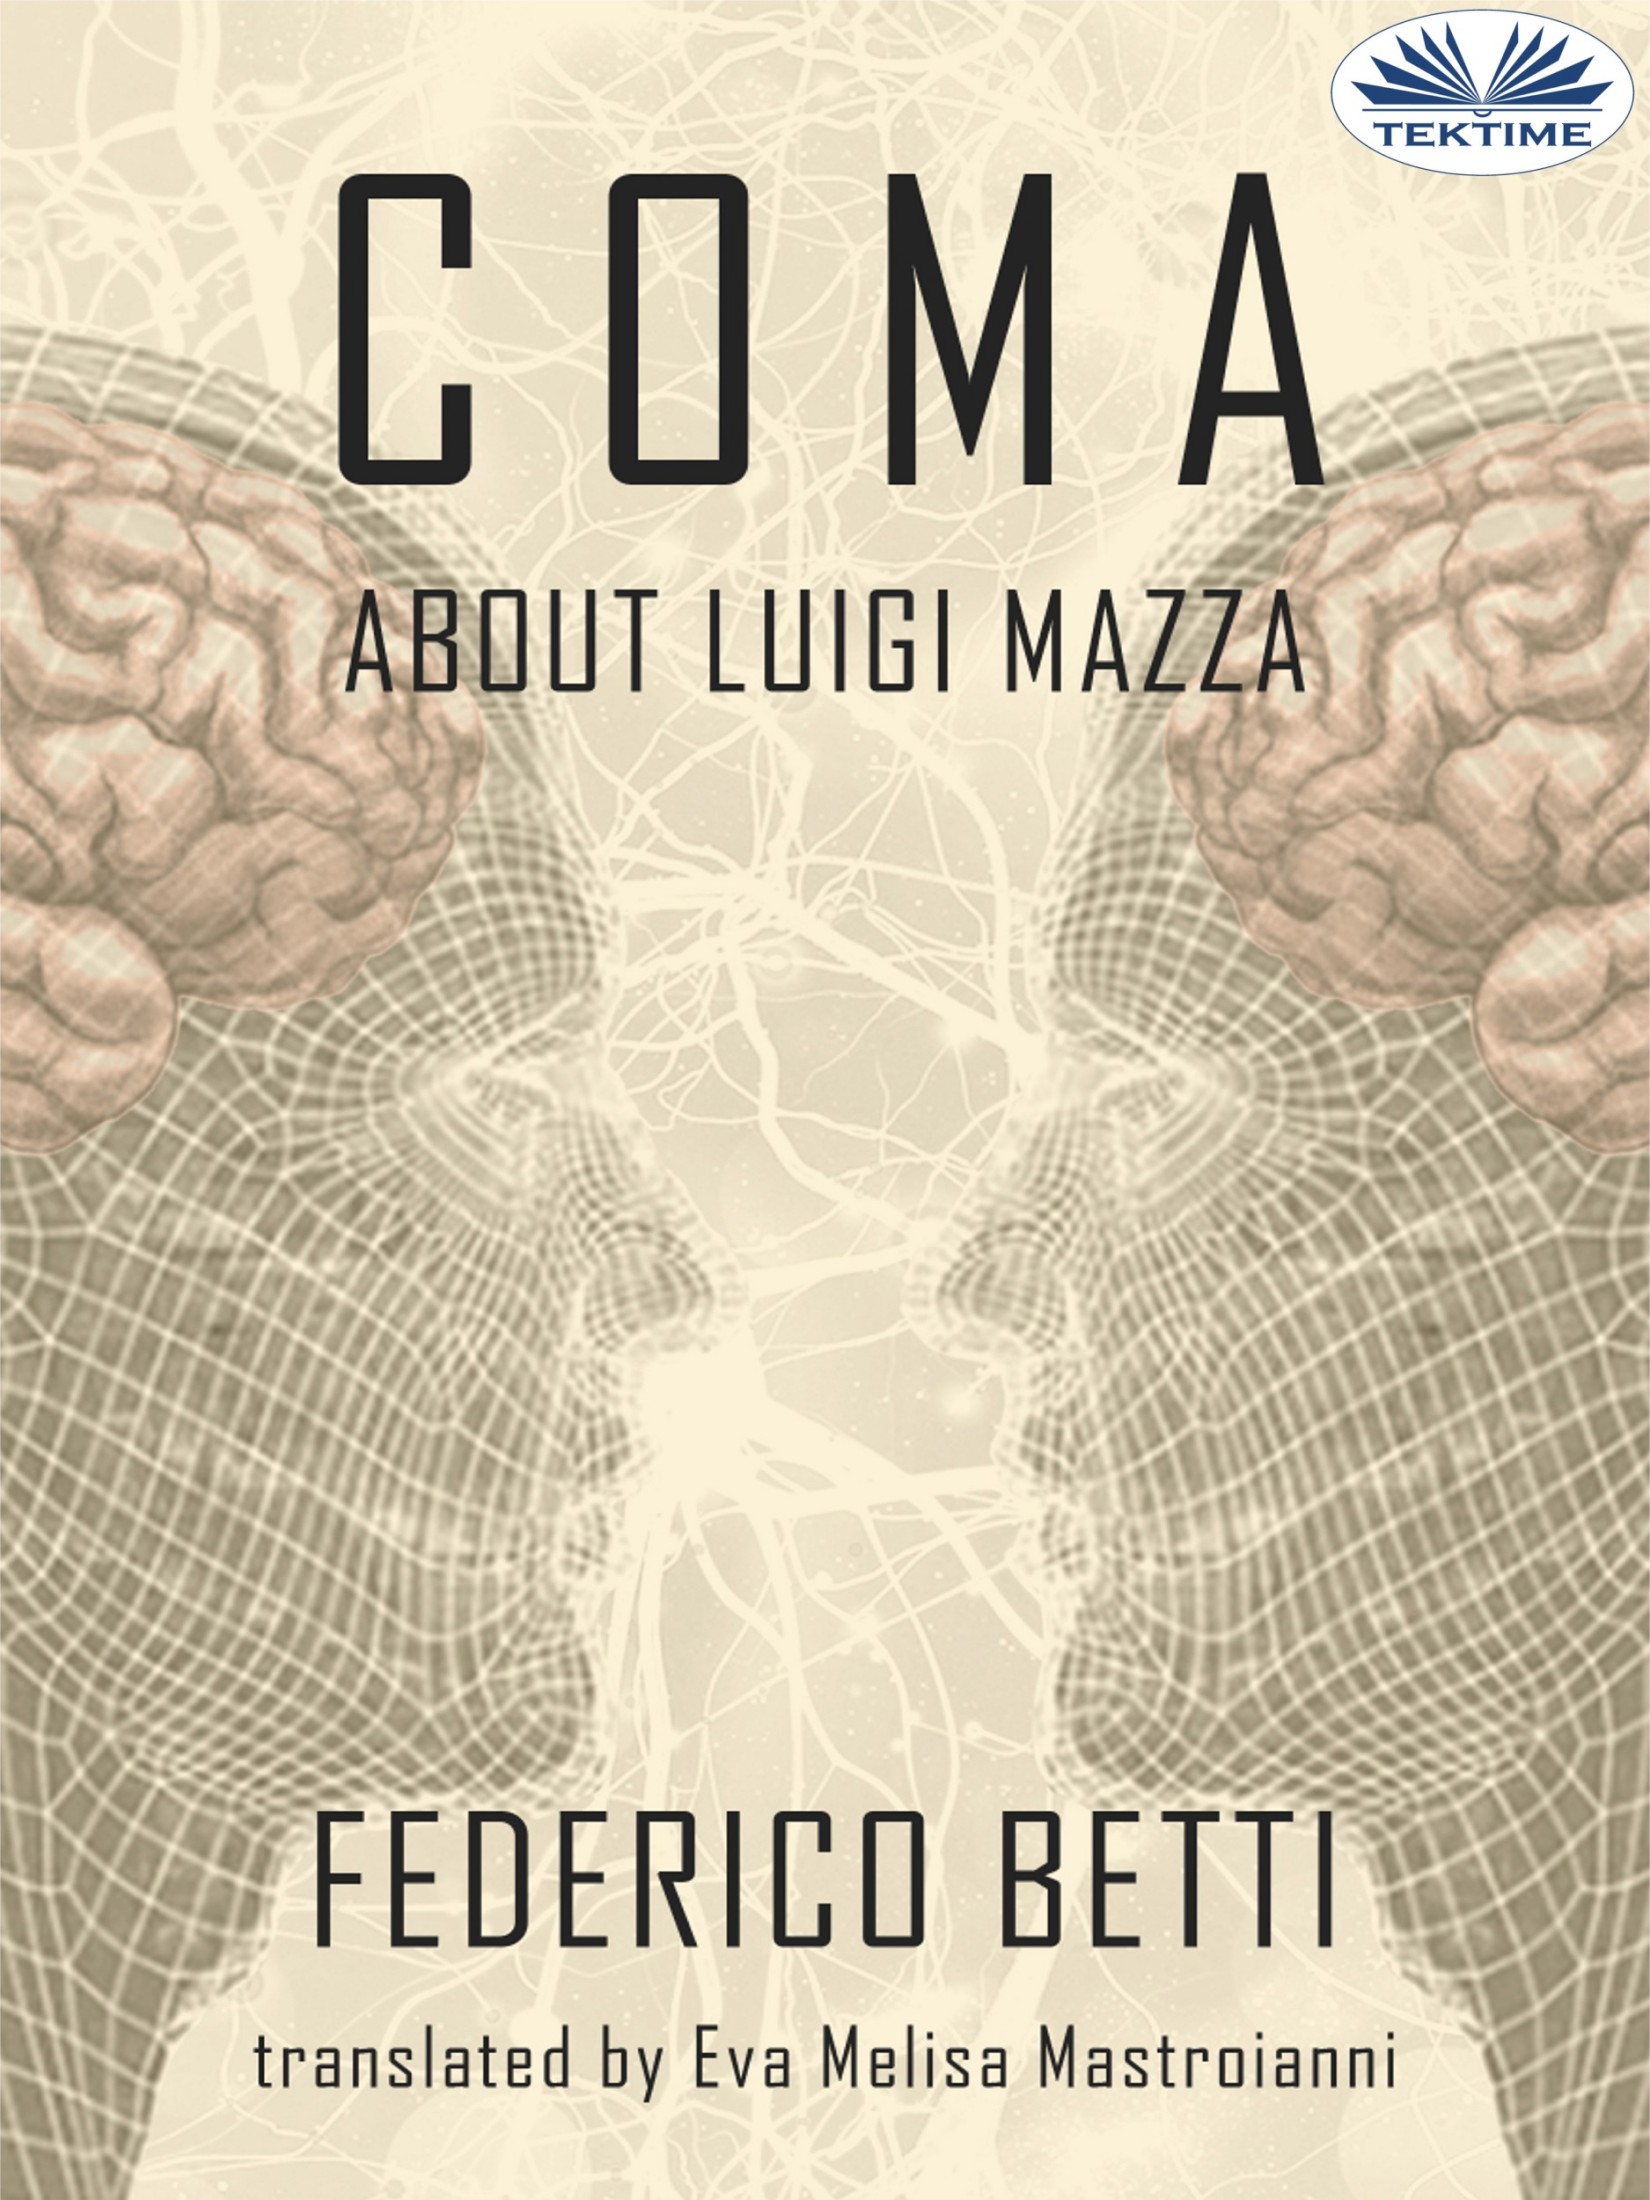 Coma - About Luigi Mazza